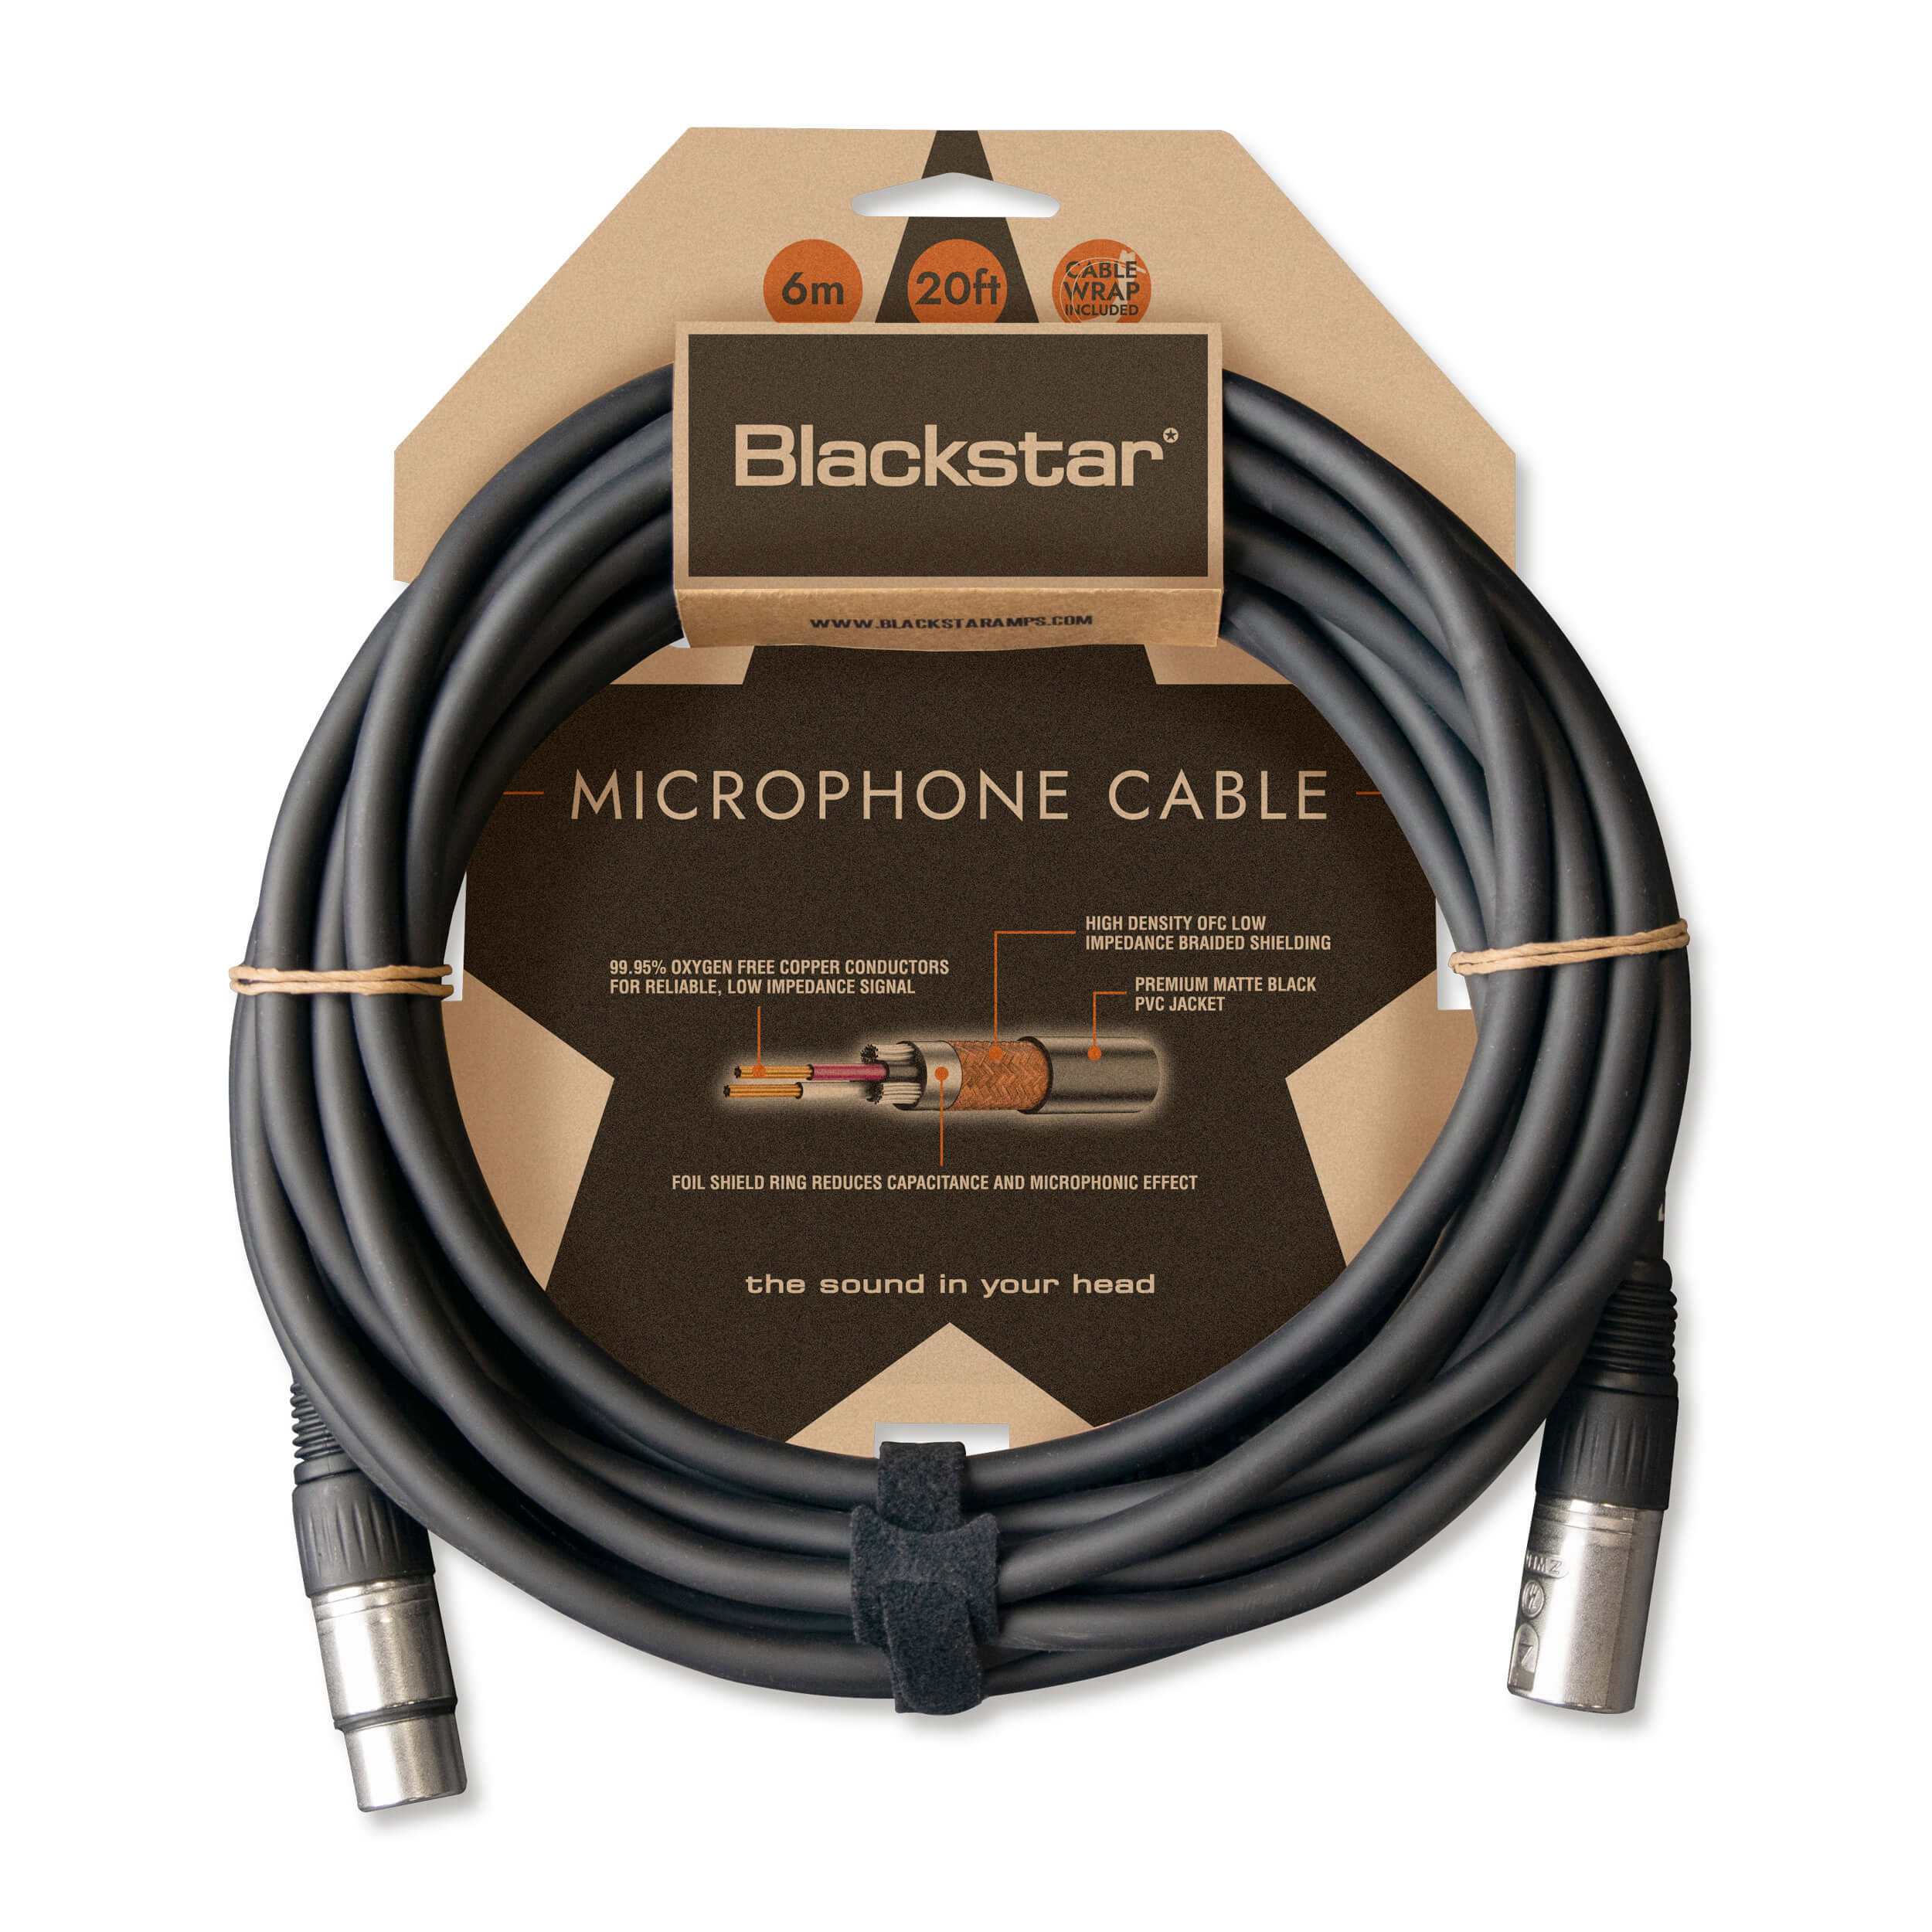 Blackstar Microphone Cable (3m)